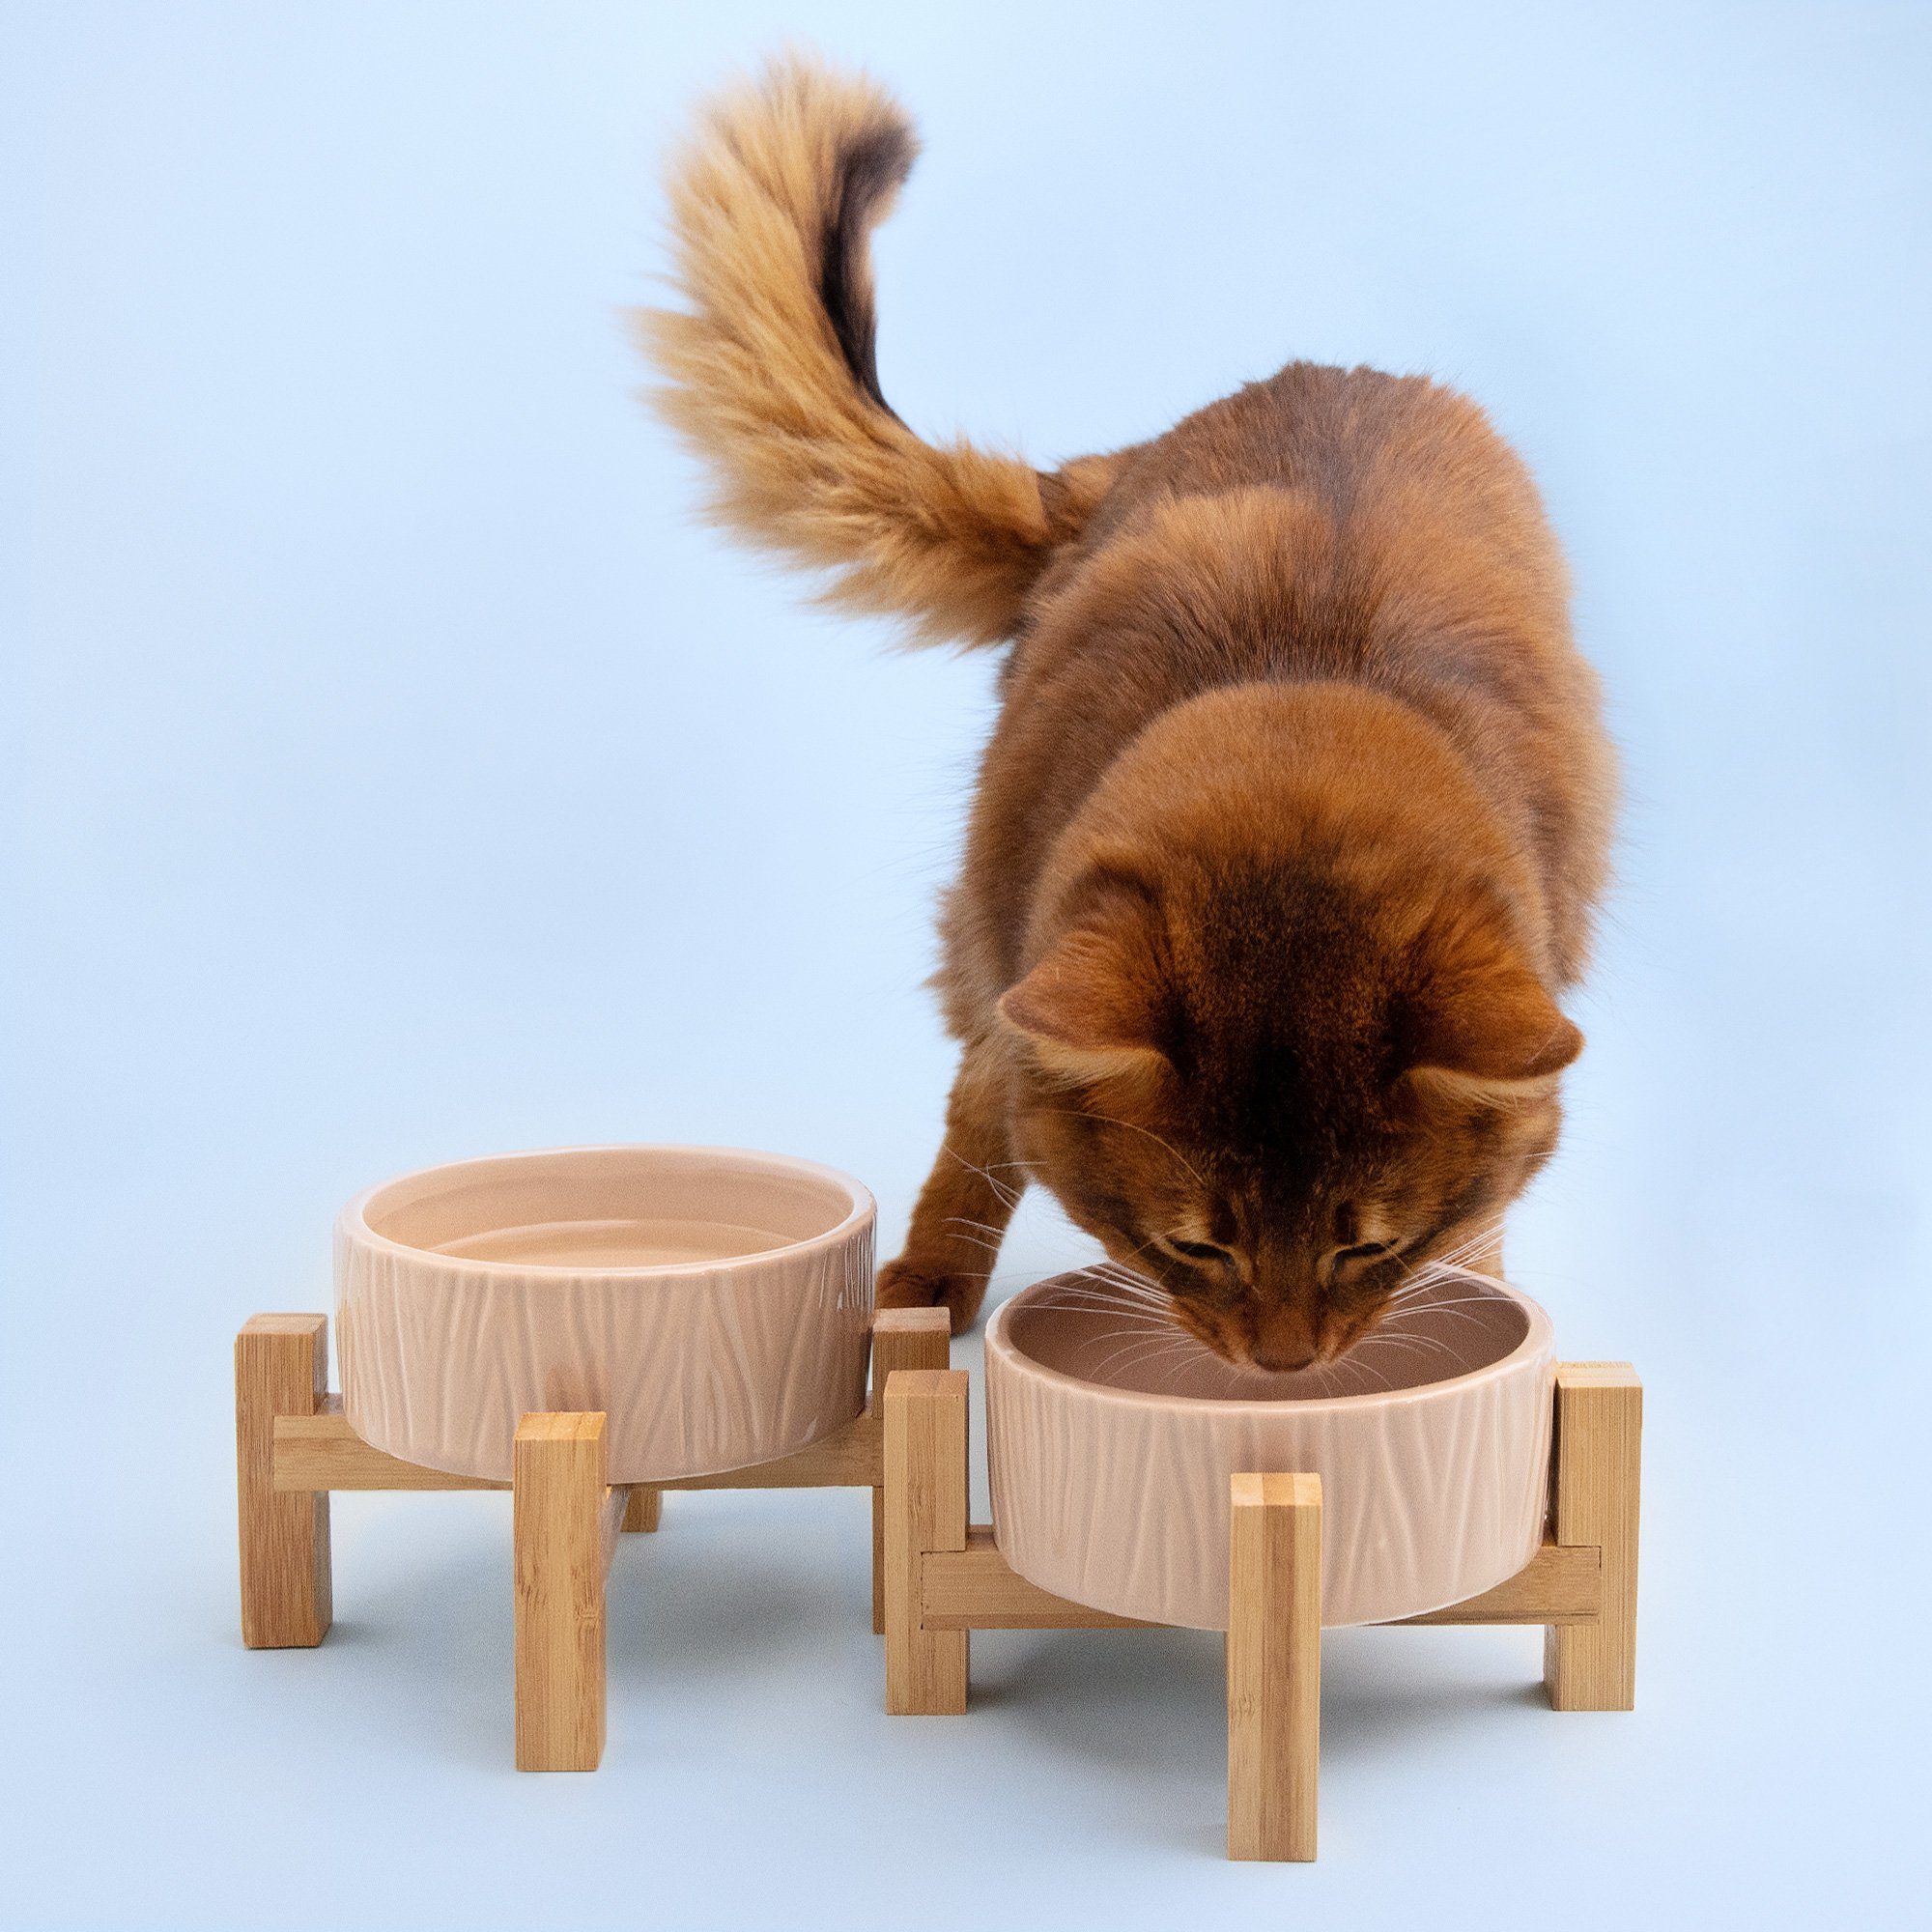 Navaris Napf-Set, Keramik, 2x Futternapf Katze mit Bambus Halter -  Futterstation 2x Keramiknapf für Katzen Hunde - Keramik Fressnapf Set  Futterbar mit Holz Halterung online kaufen | OTTO